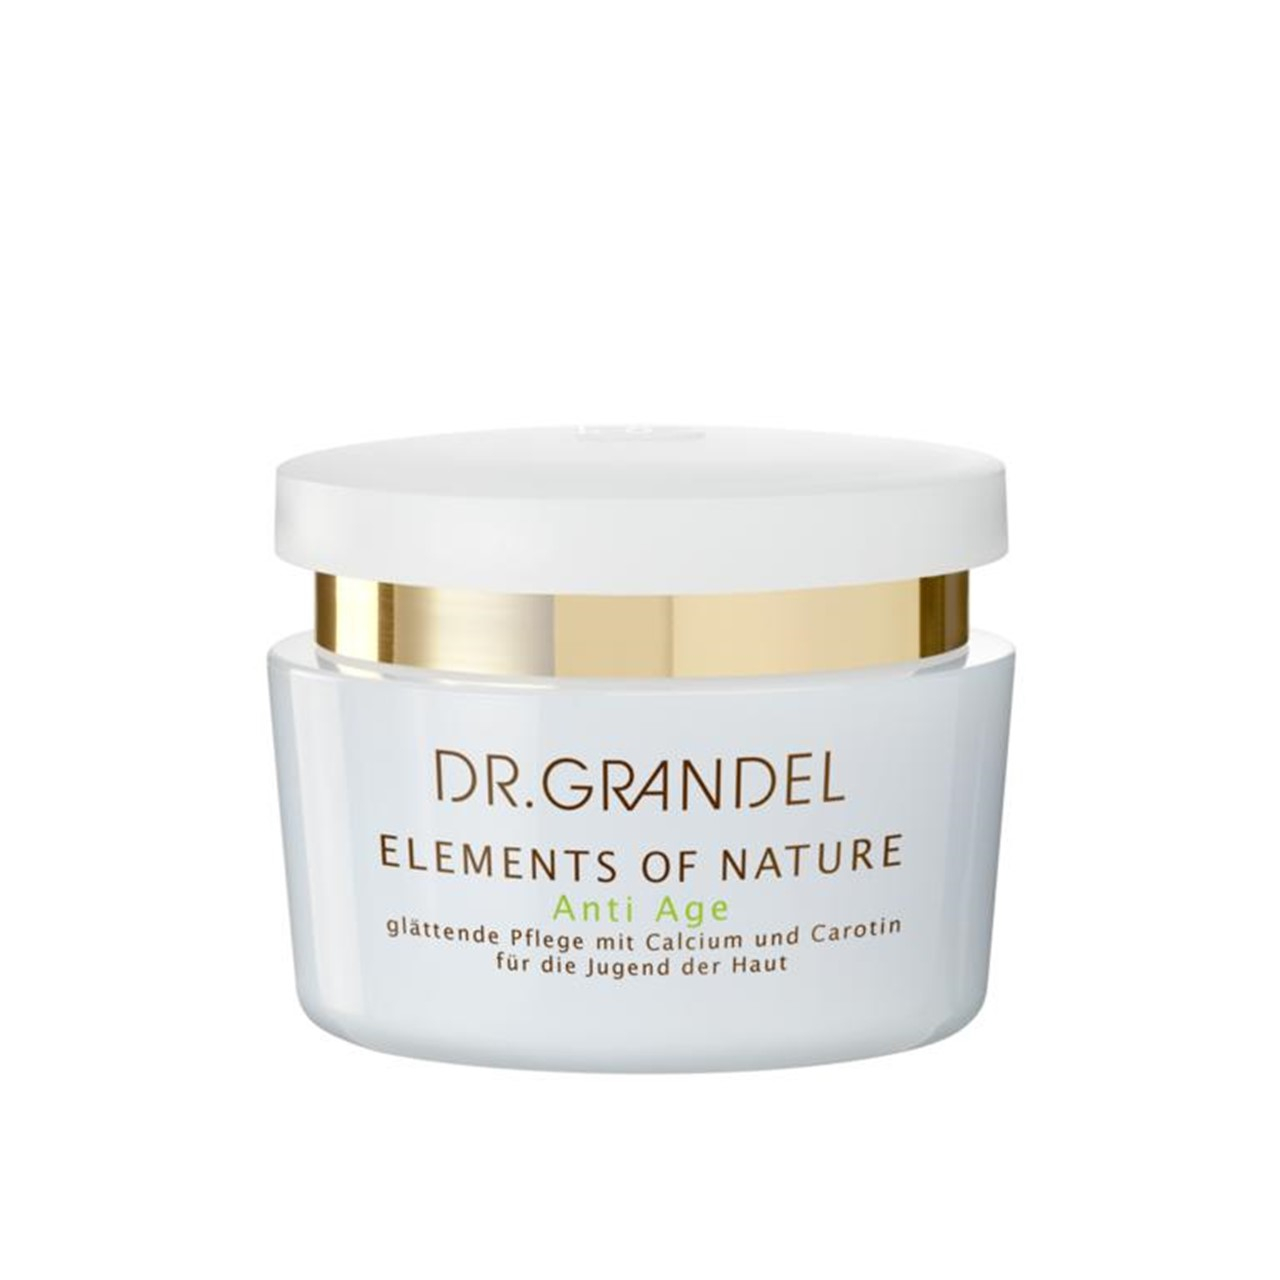 DR. GRANDEL Elements Of Nature Anti Age Cream 50ml